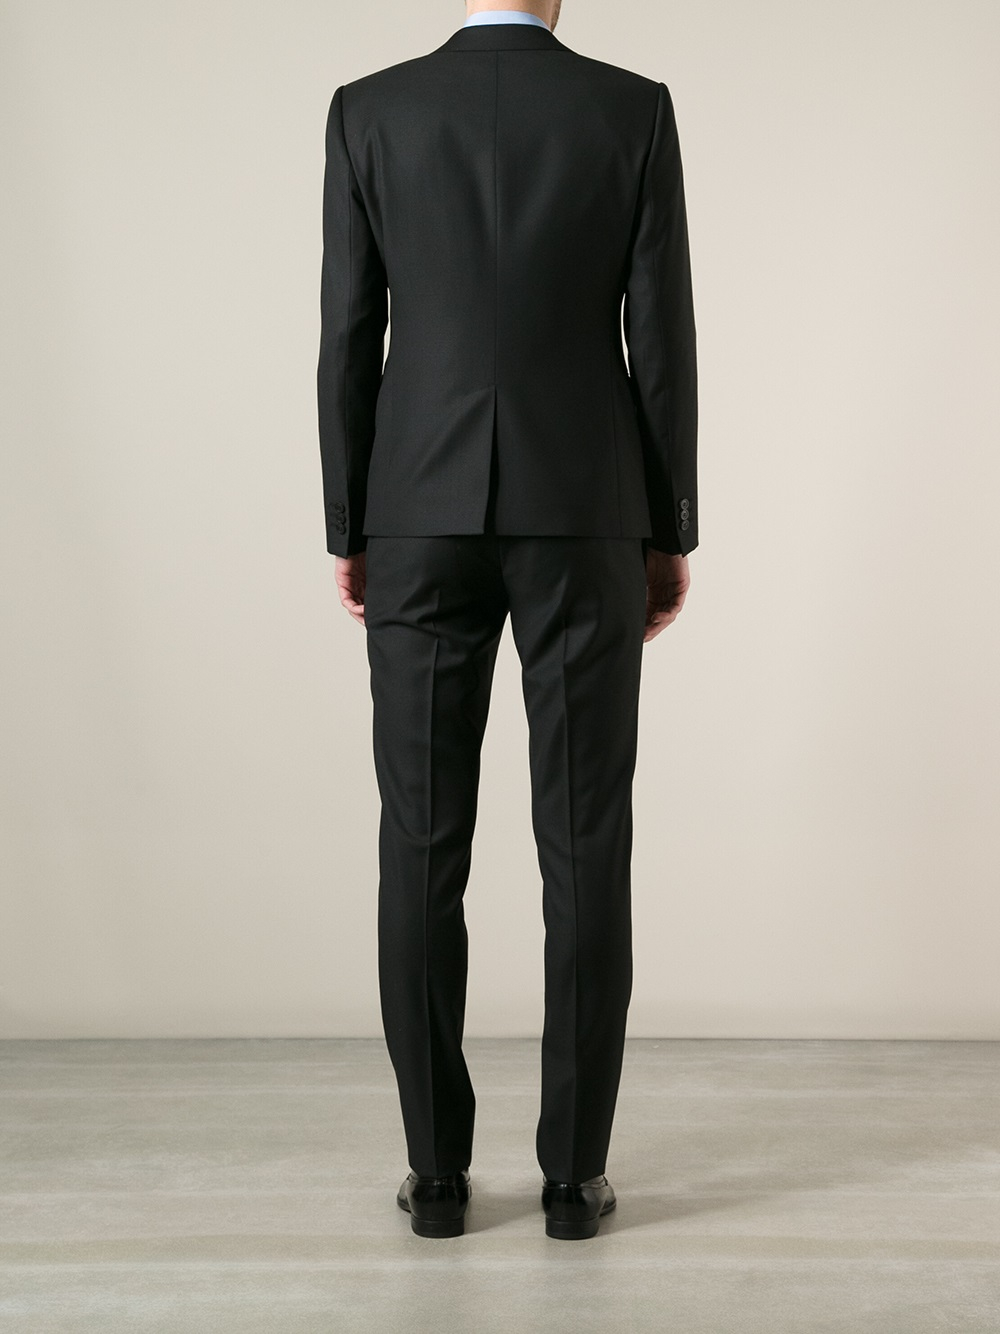 Emporio Armani David Line Suit in Black for Men - Lyst